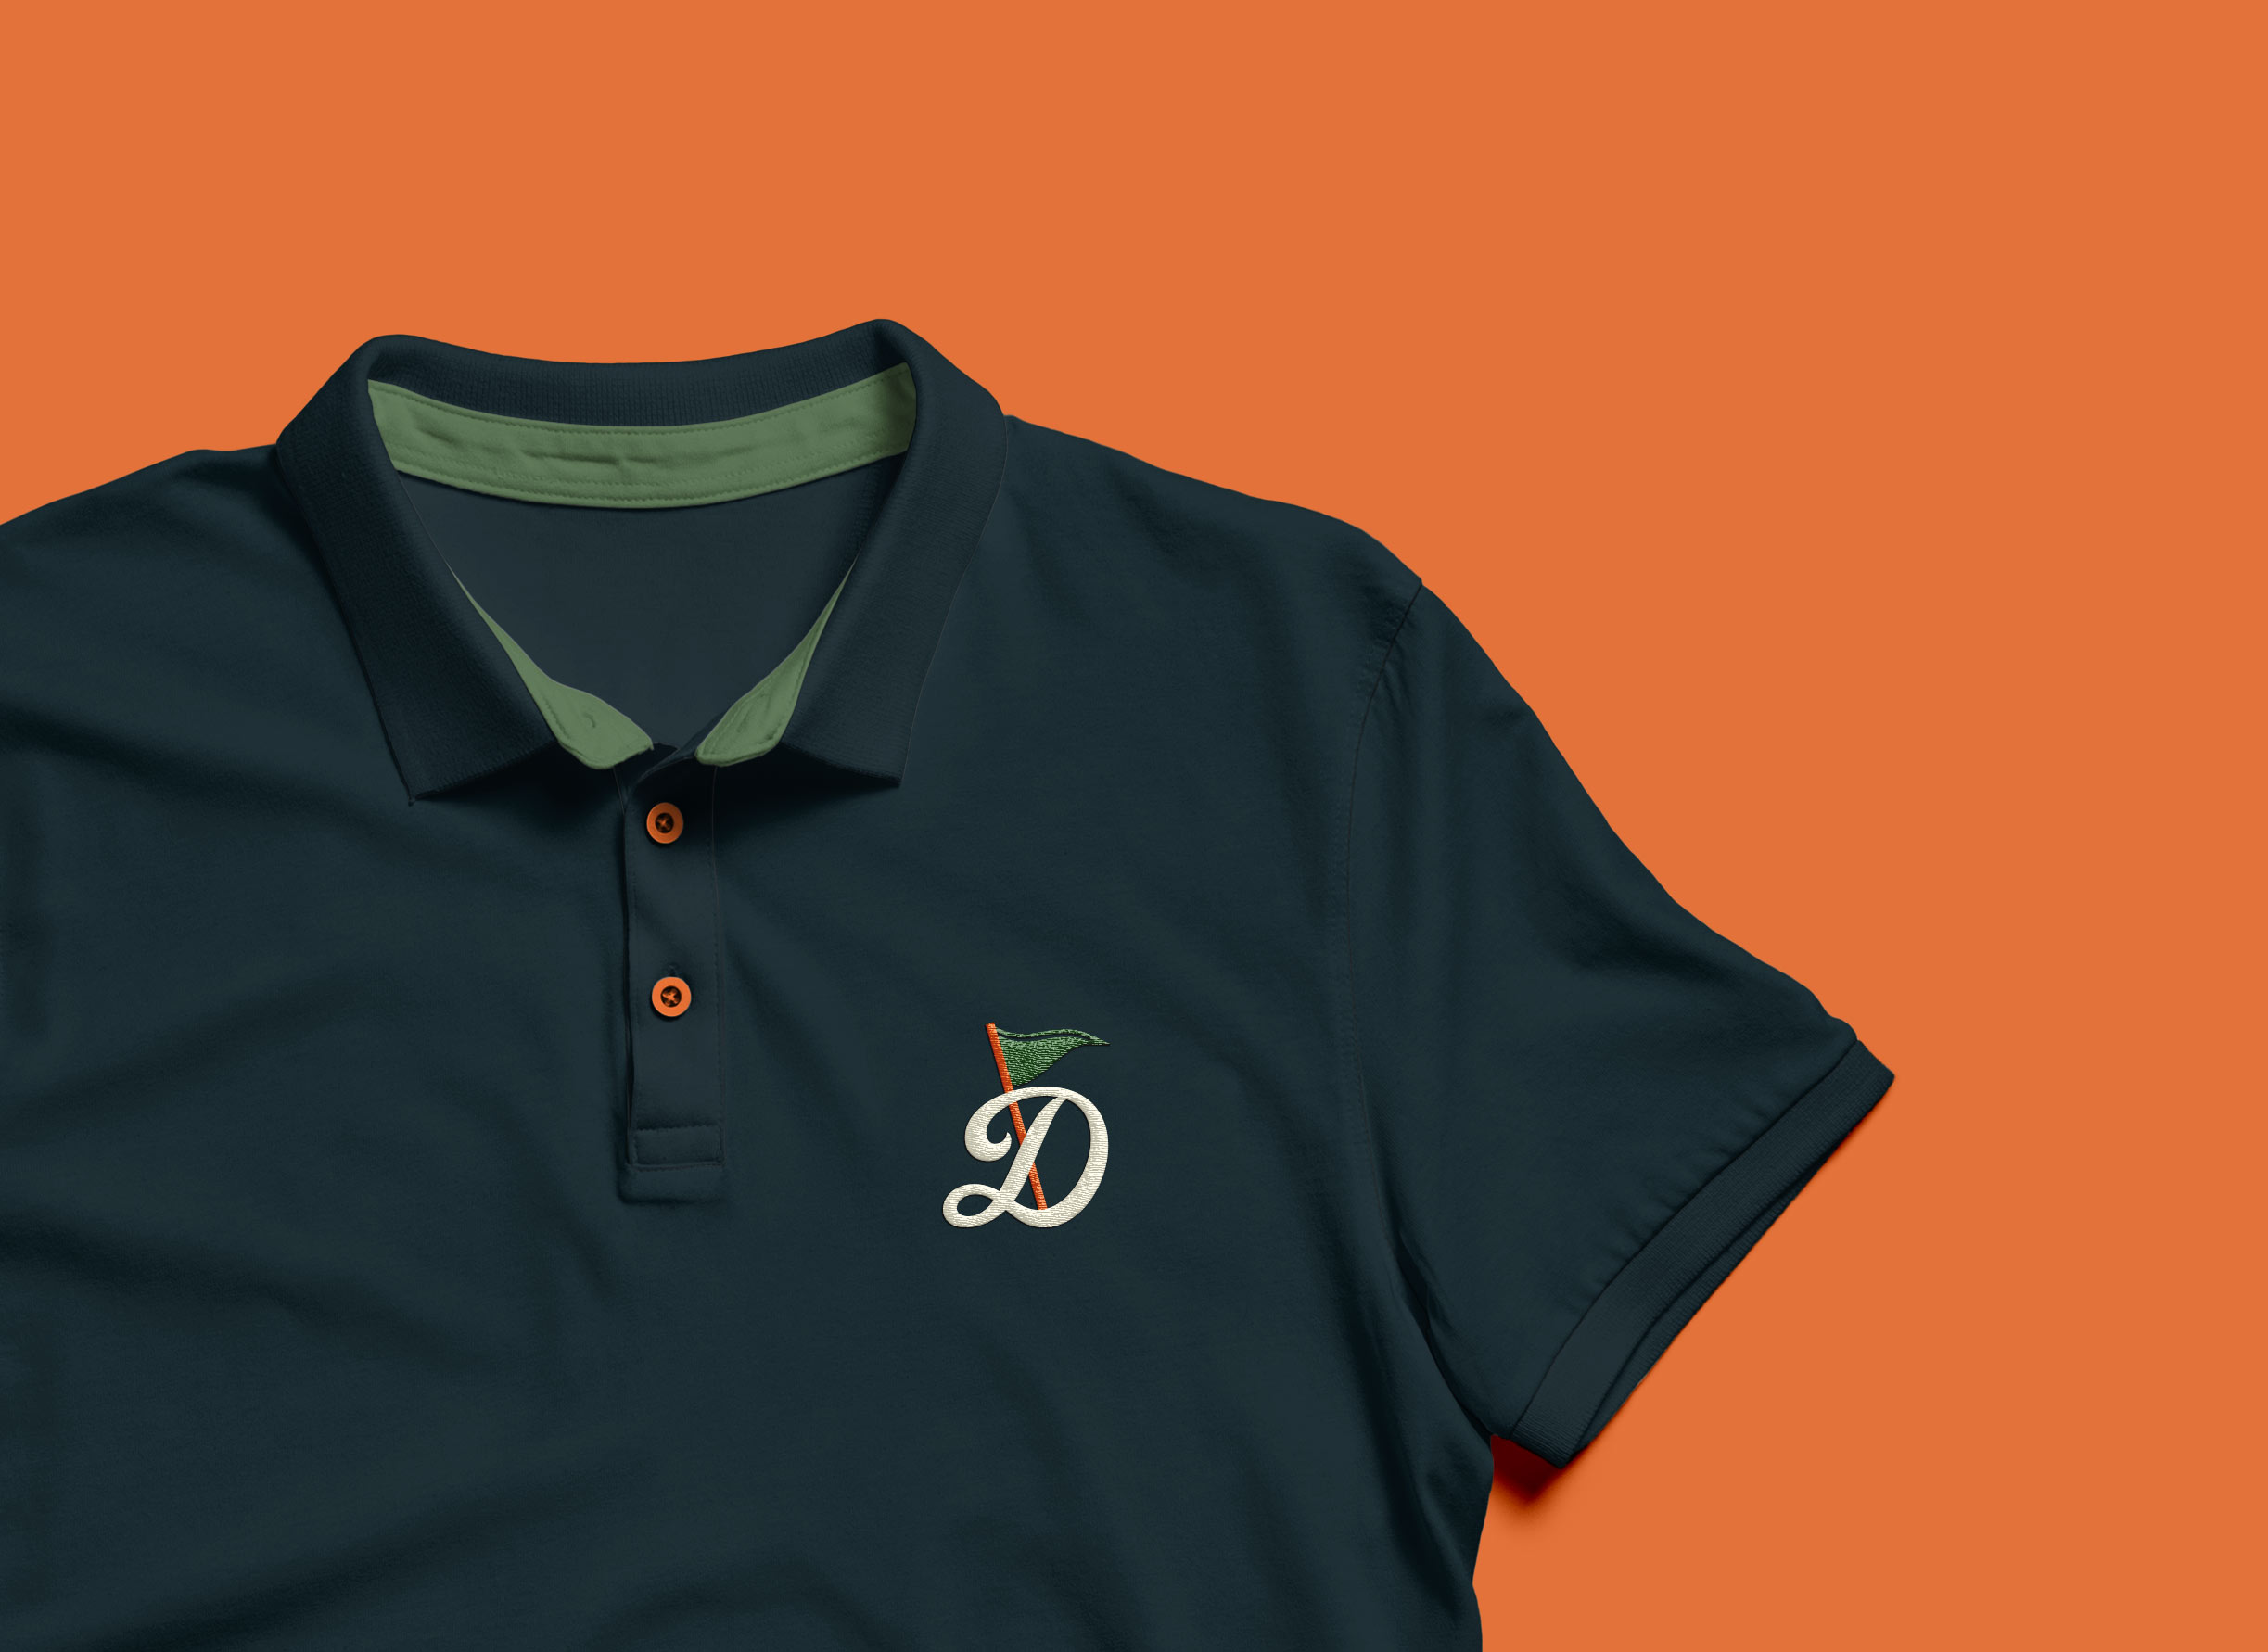 A golf polo shirt displaying a monogram logo design.